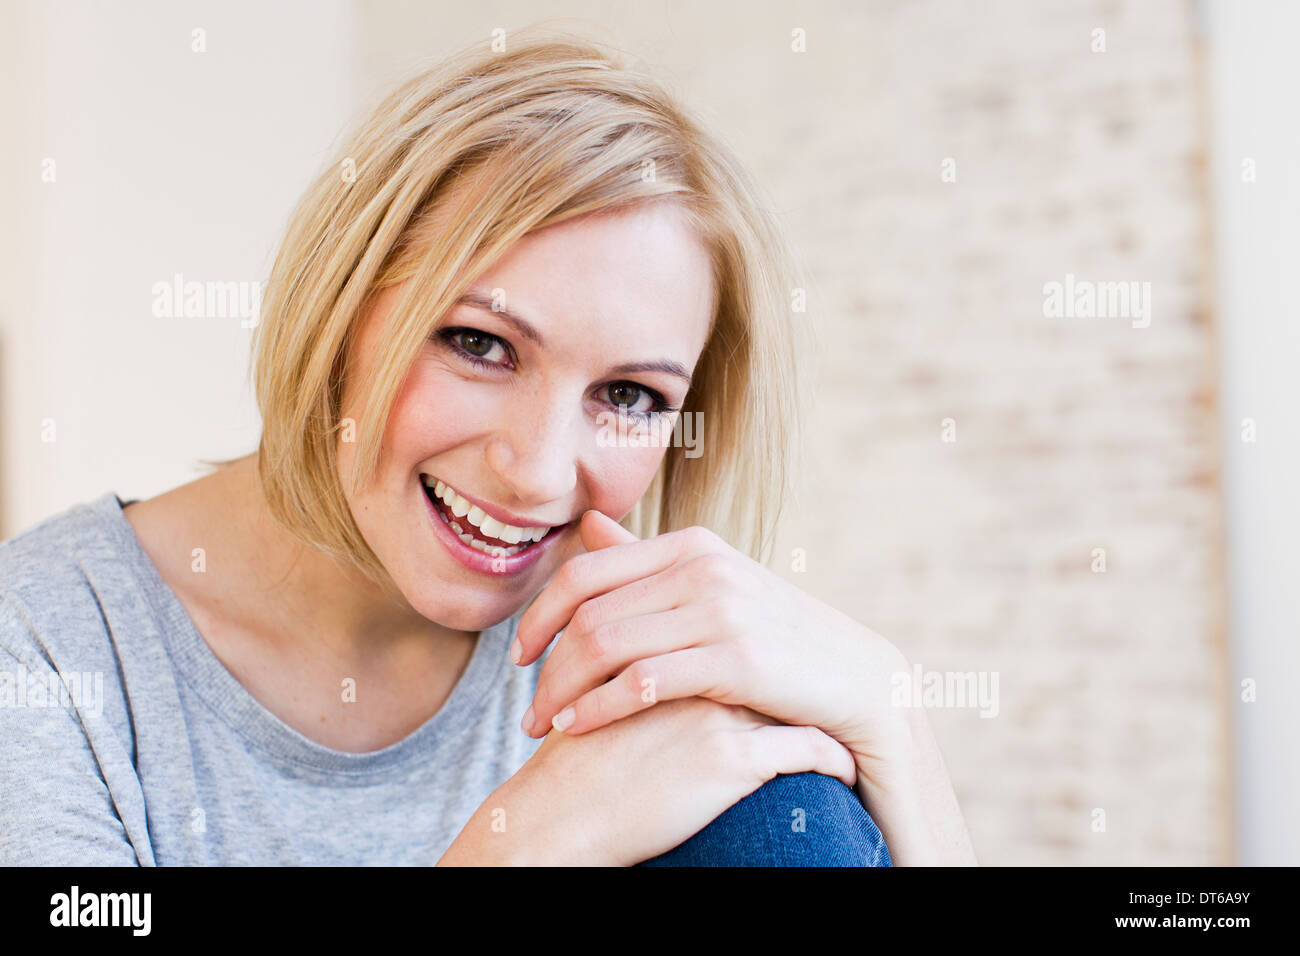 Studio portrait of smiling young woman Banque D'Images